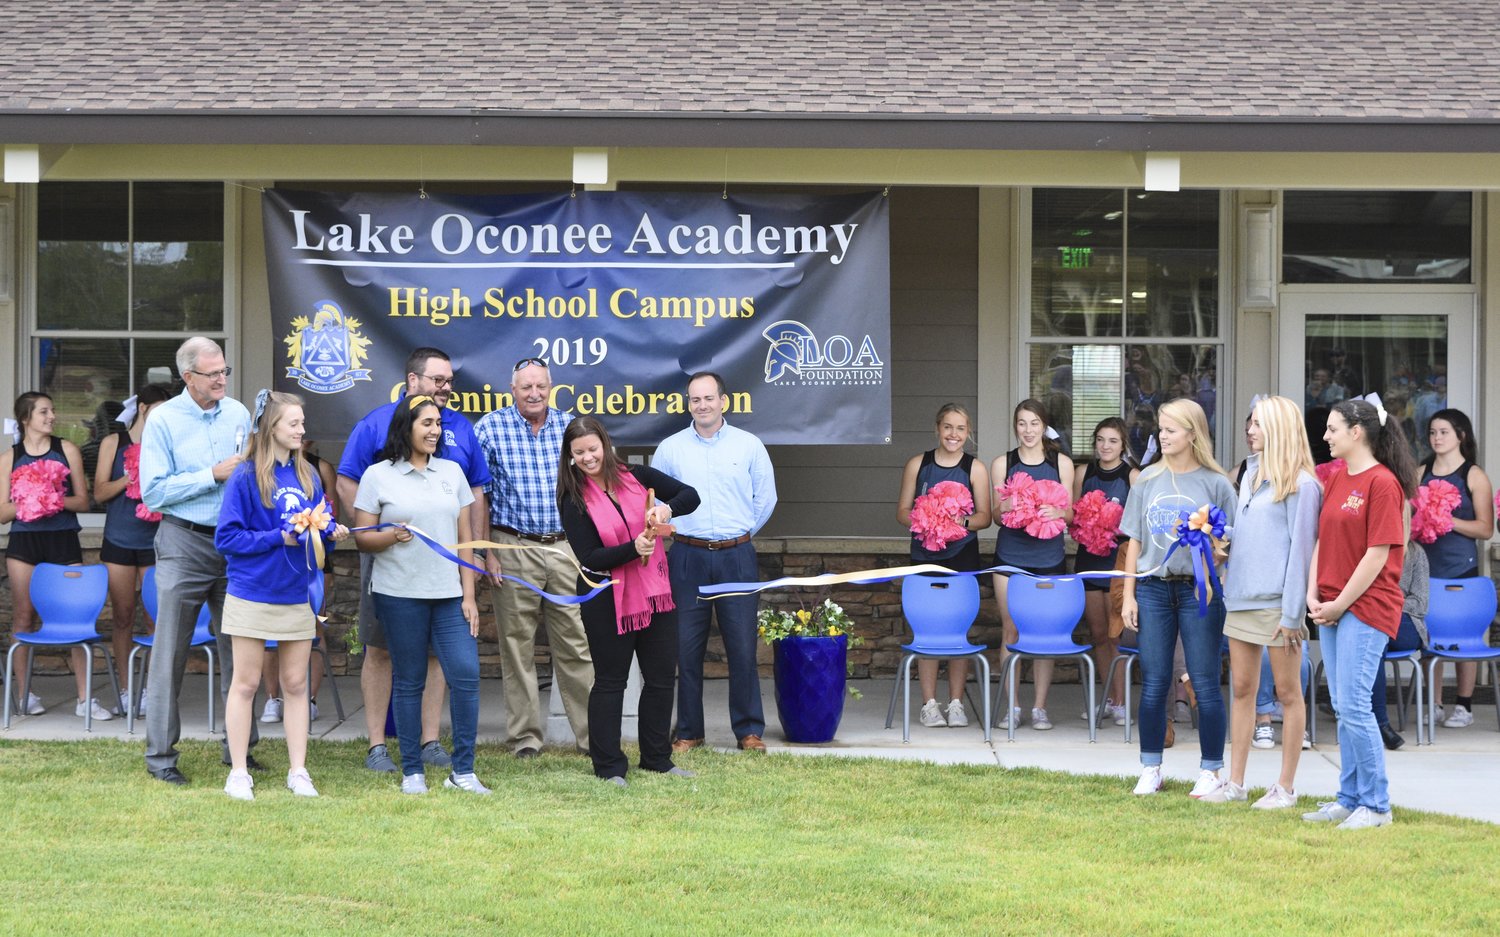 lake-oconee-academy-officially-opens-new-high-school-campus-lake-oconee-academy